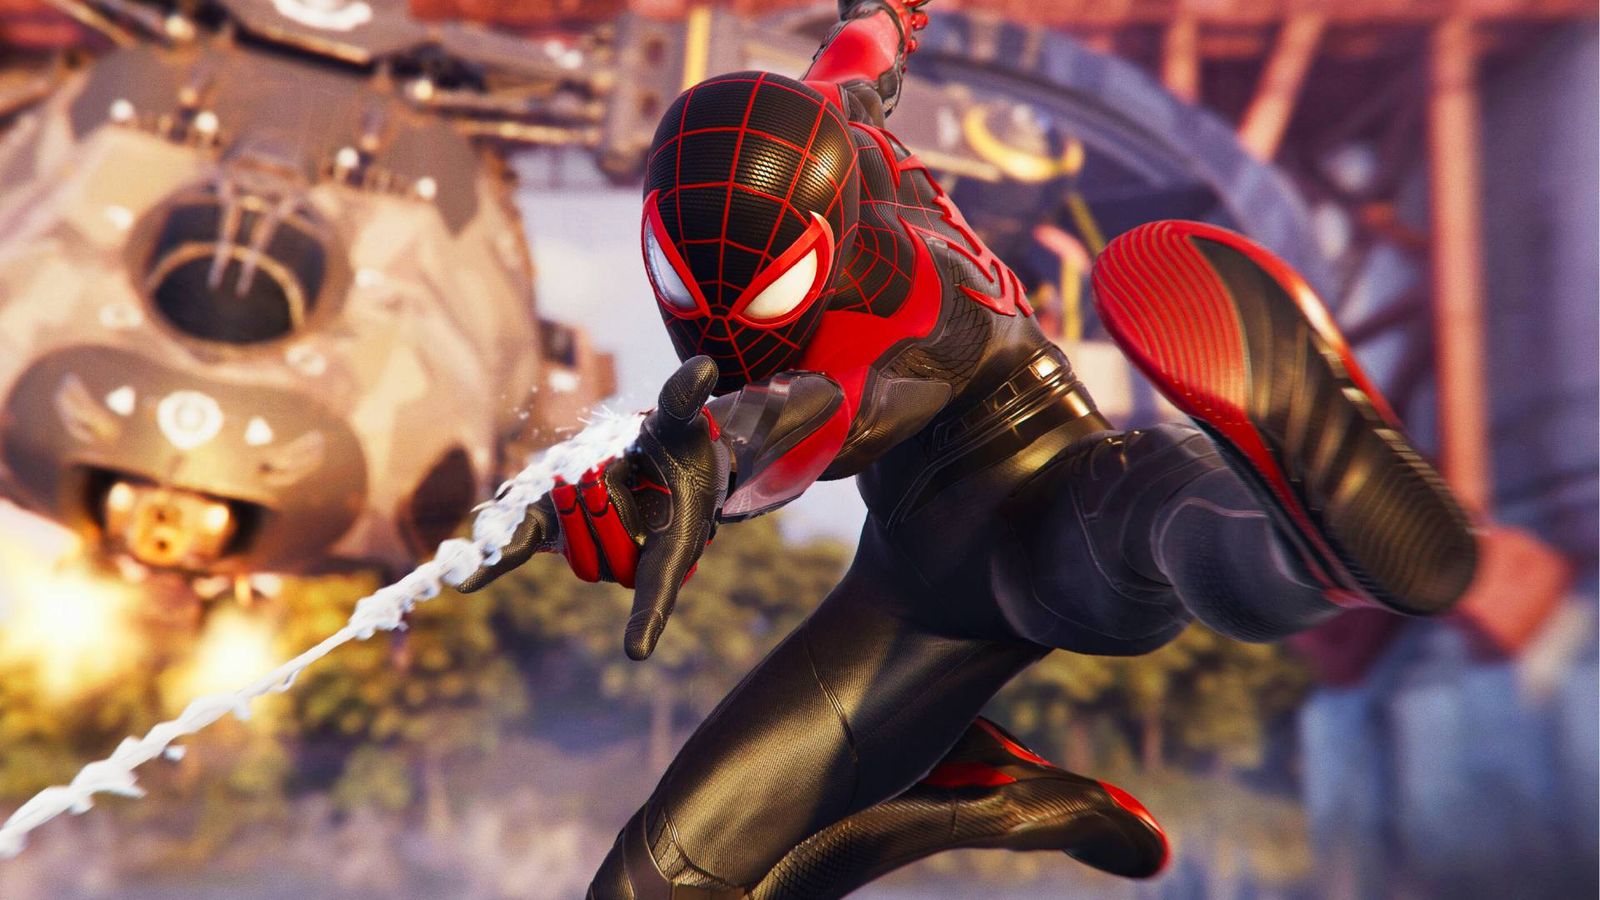 Miles Morales Spider-Man shooting a web